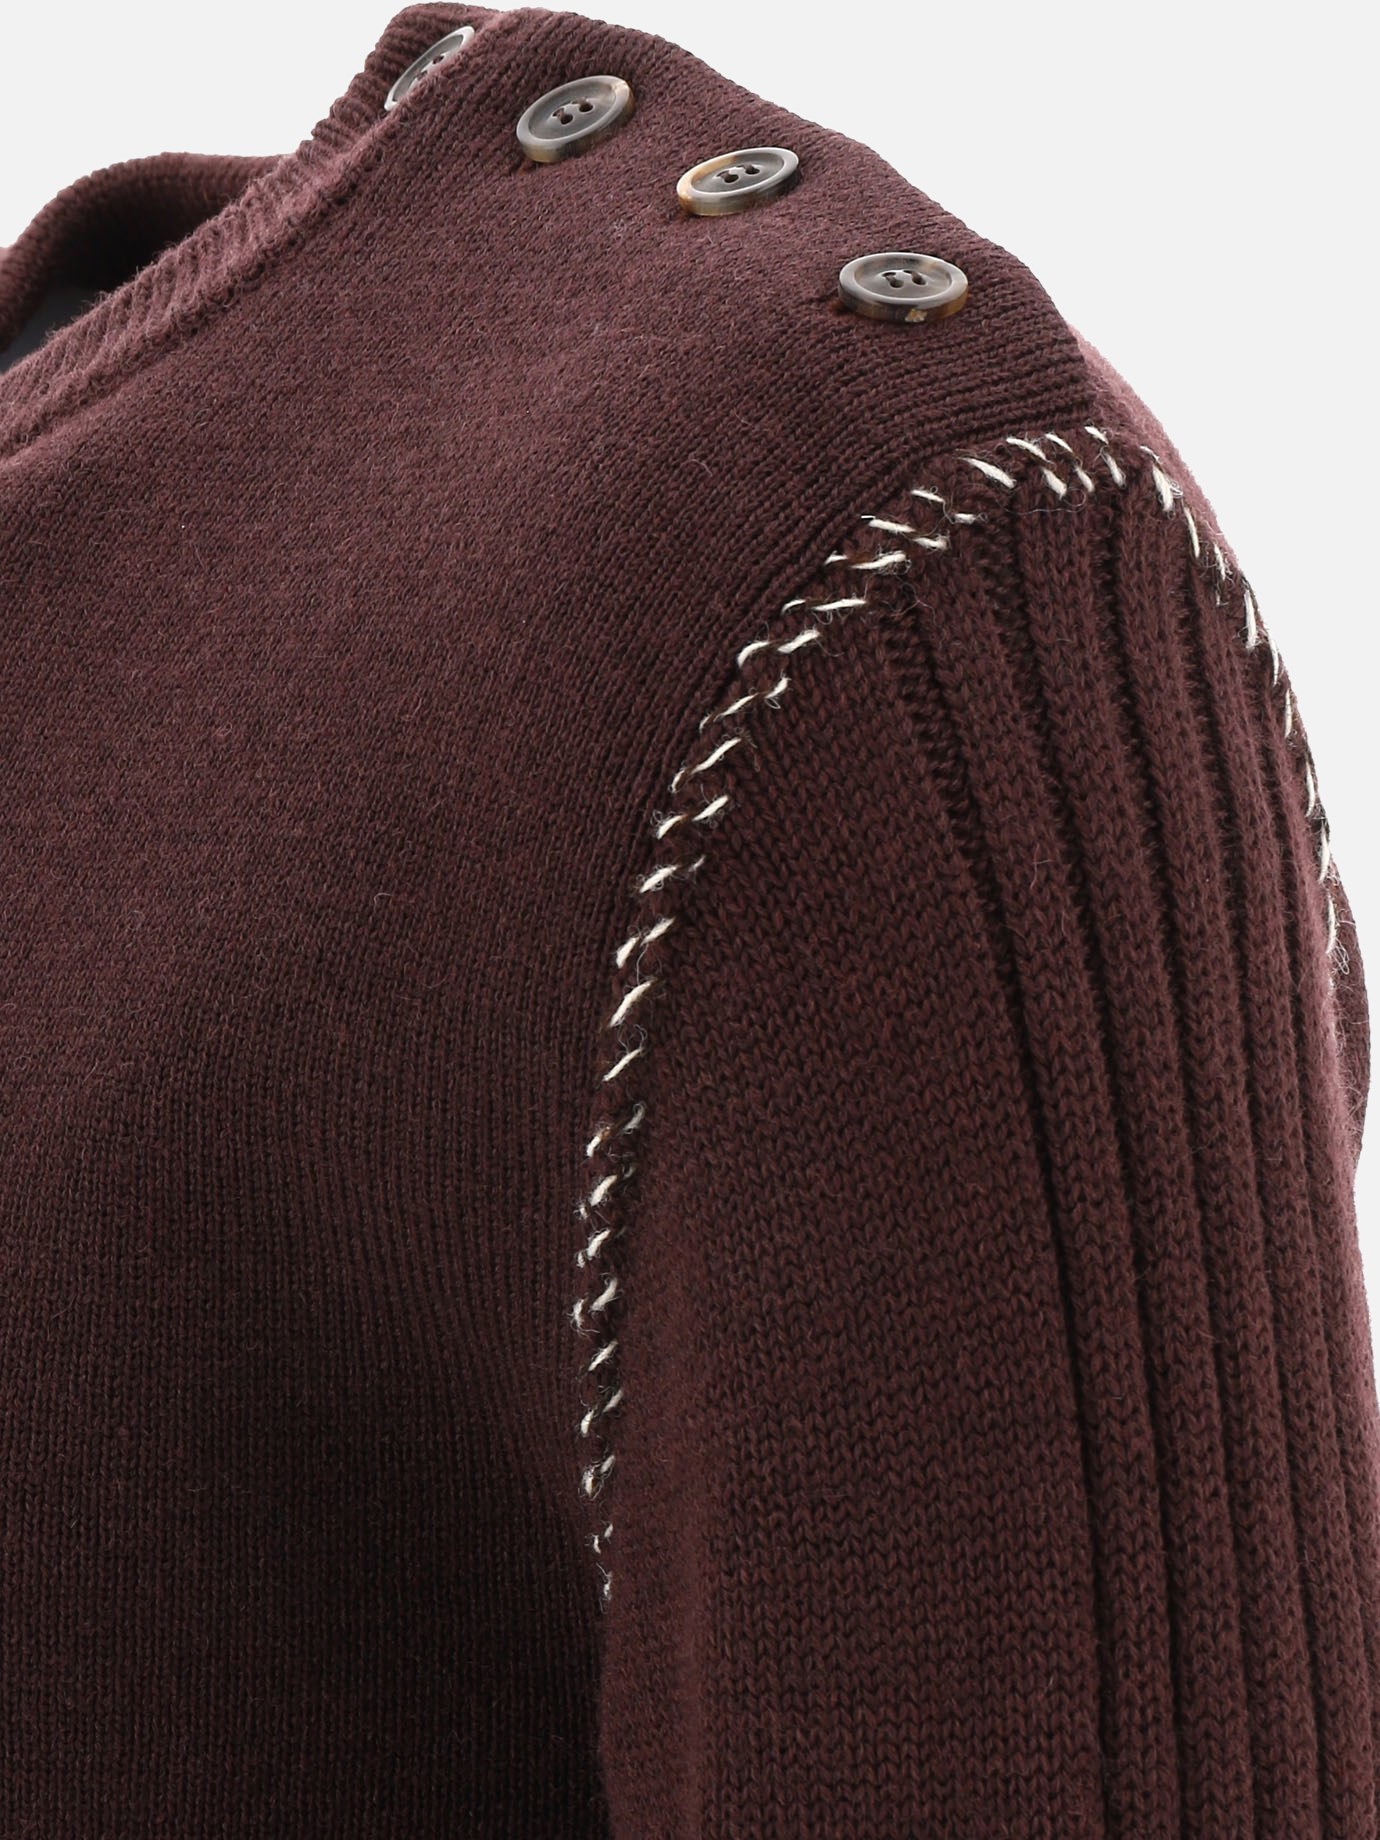  Four Stitches  sweater by Maison Margiela